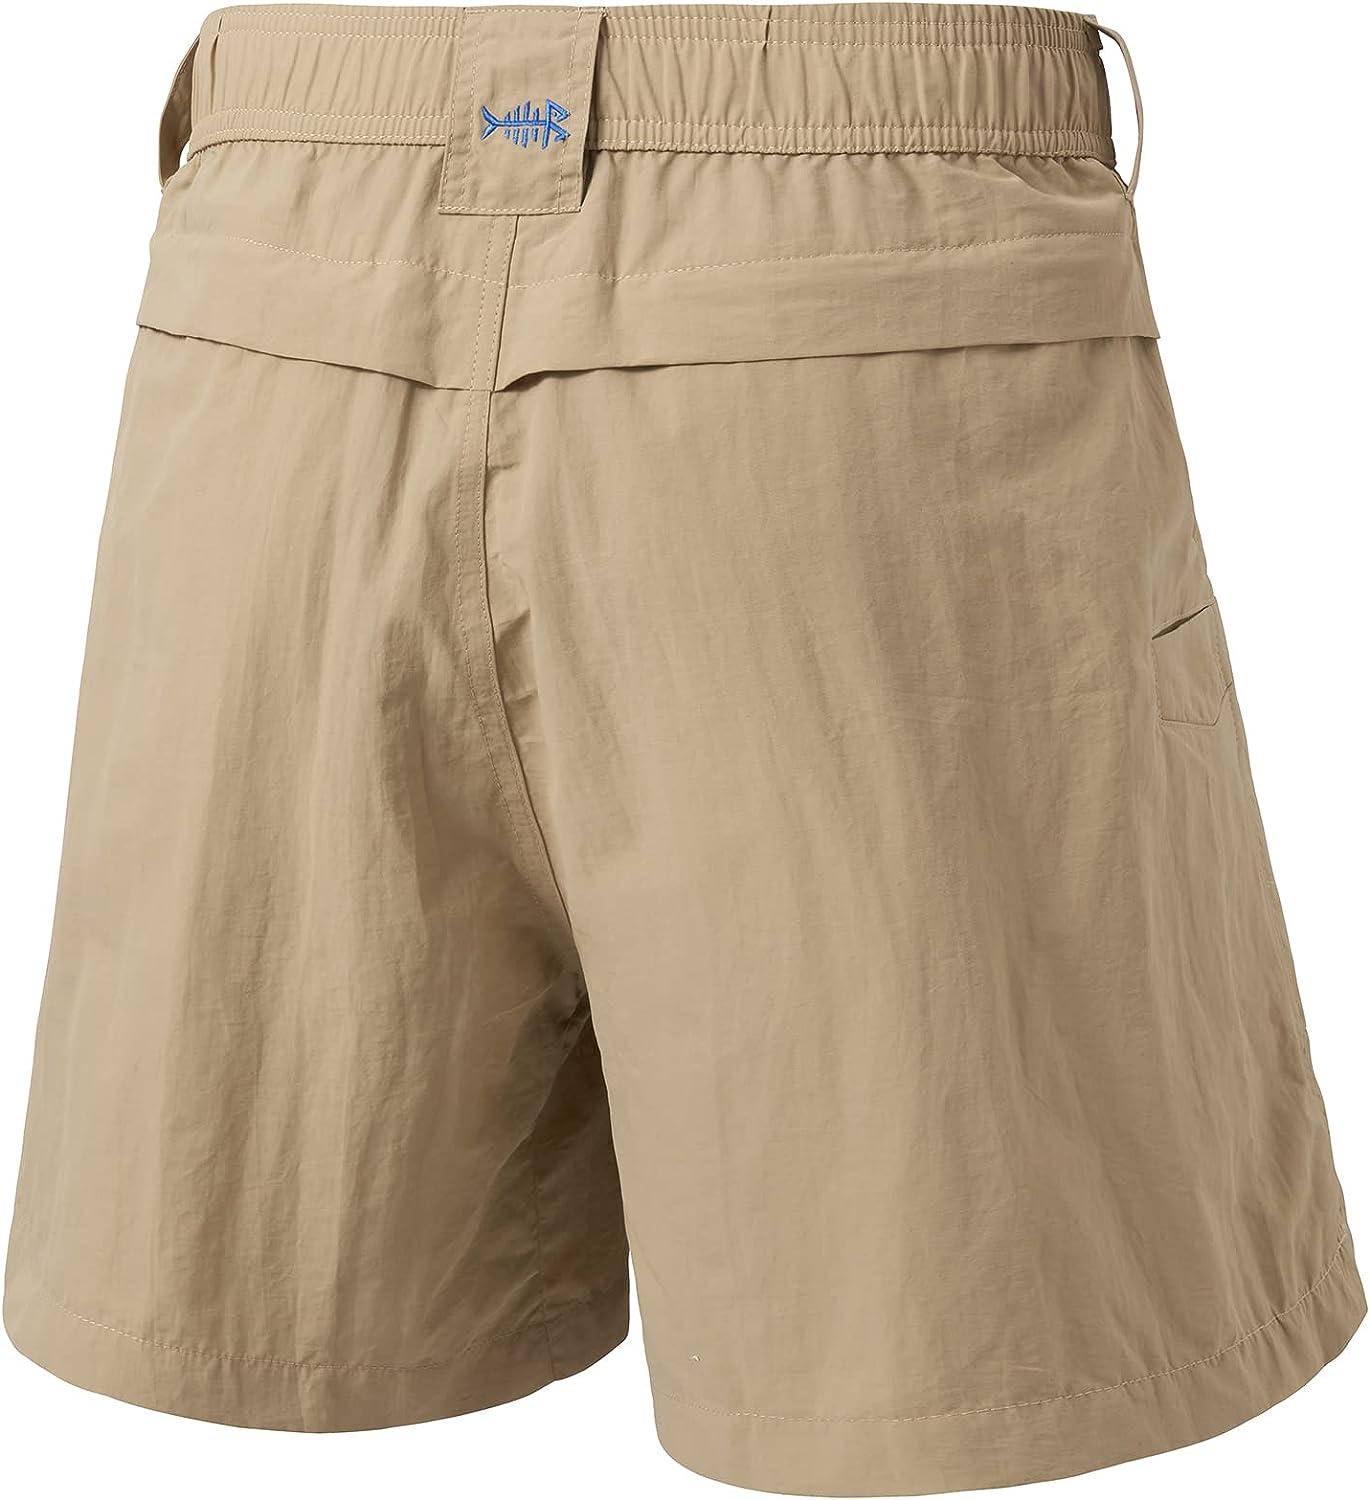 Bassdash Men's 6 Fishing Shorts UPF 50+ Water Resistant Quick Dry